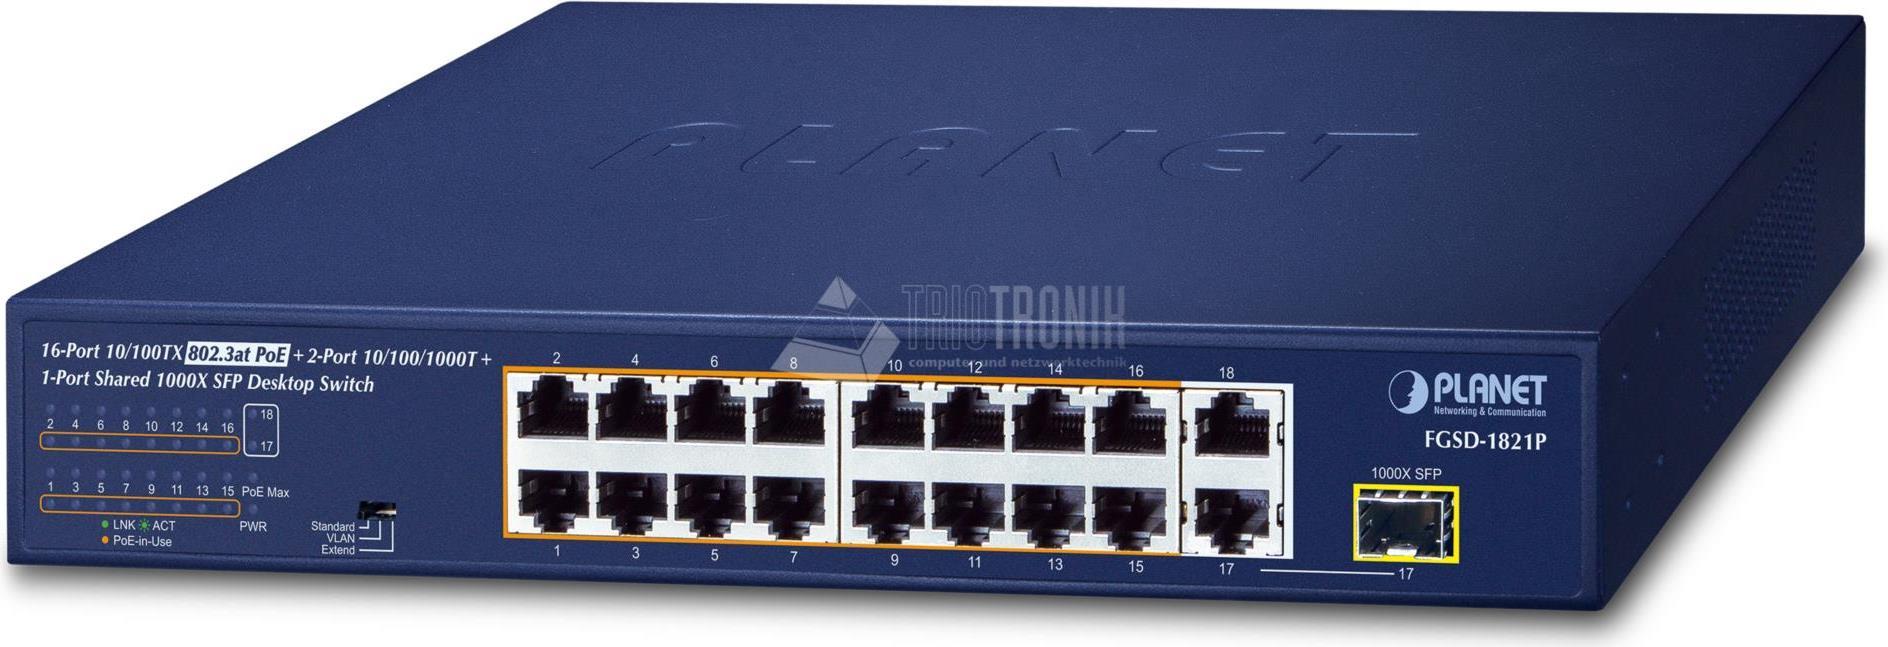 PLANET 16-Port 10/100TX 802.3at PoE Unmanaged Fast Ethernet (10/100) Power over Ethernet (PoE) 1U Blau (FGSD-1821P)